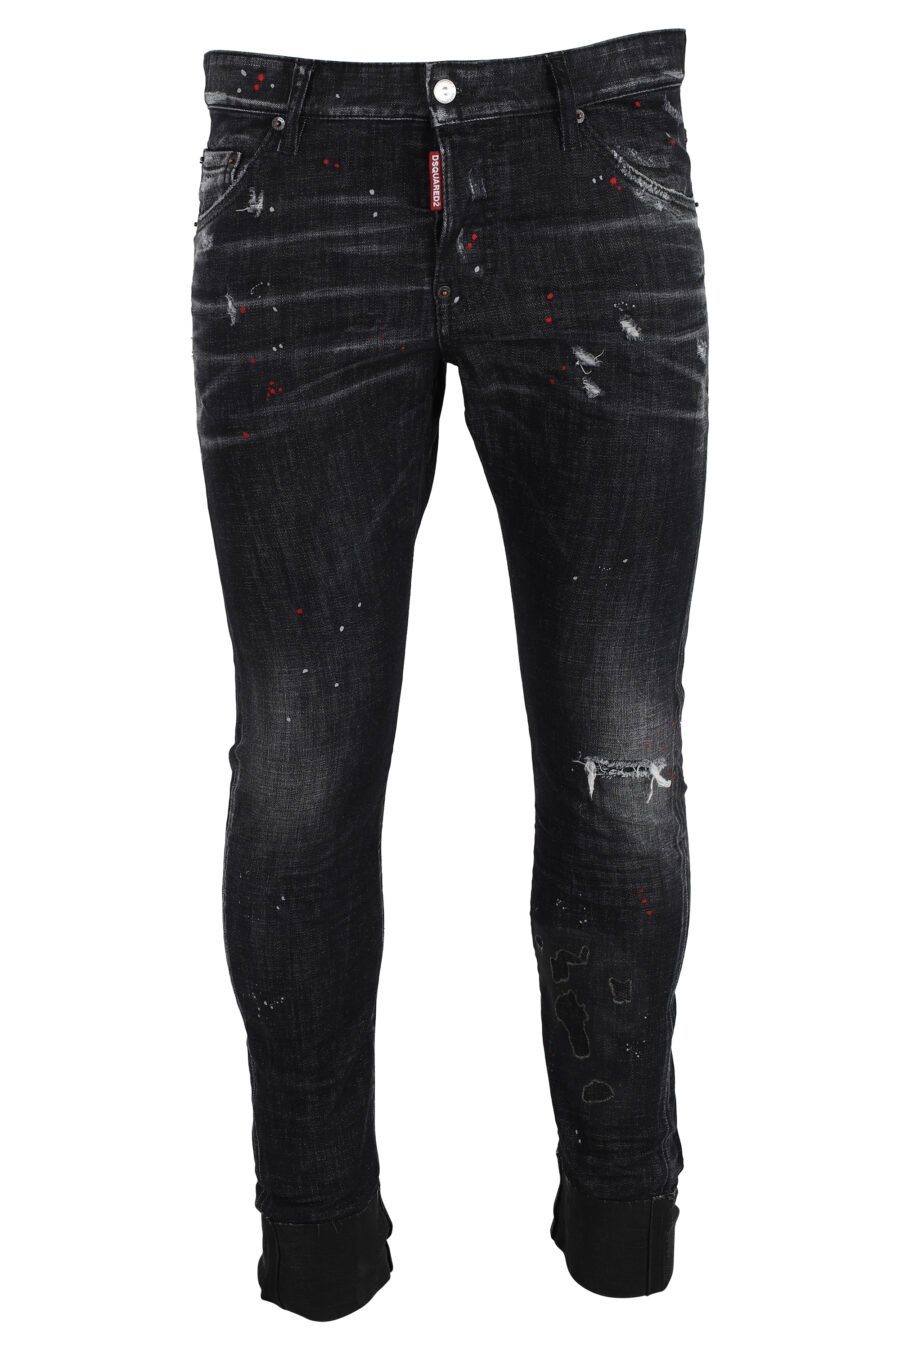 Sexy twist jean trousers black frayed - IMG 4852